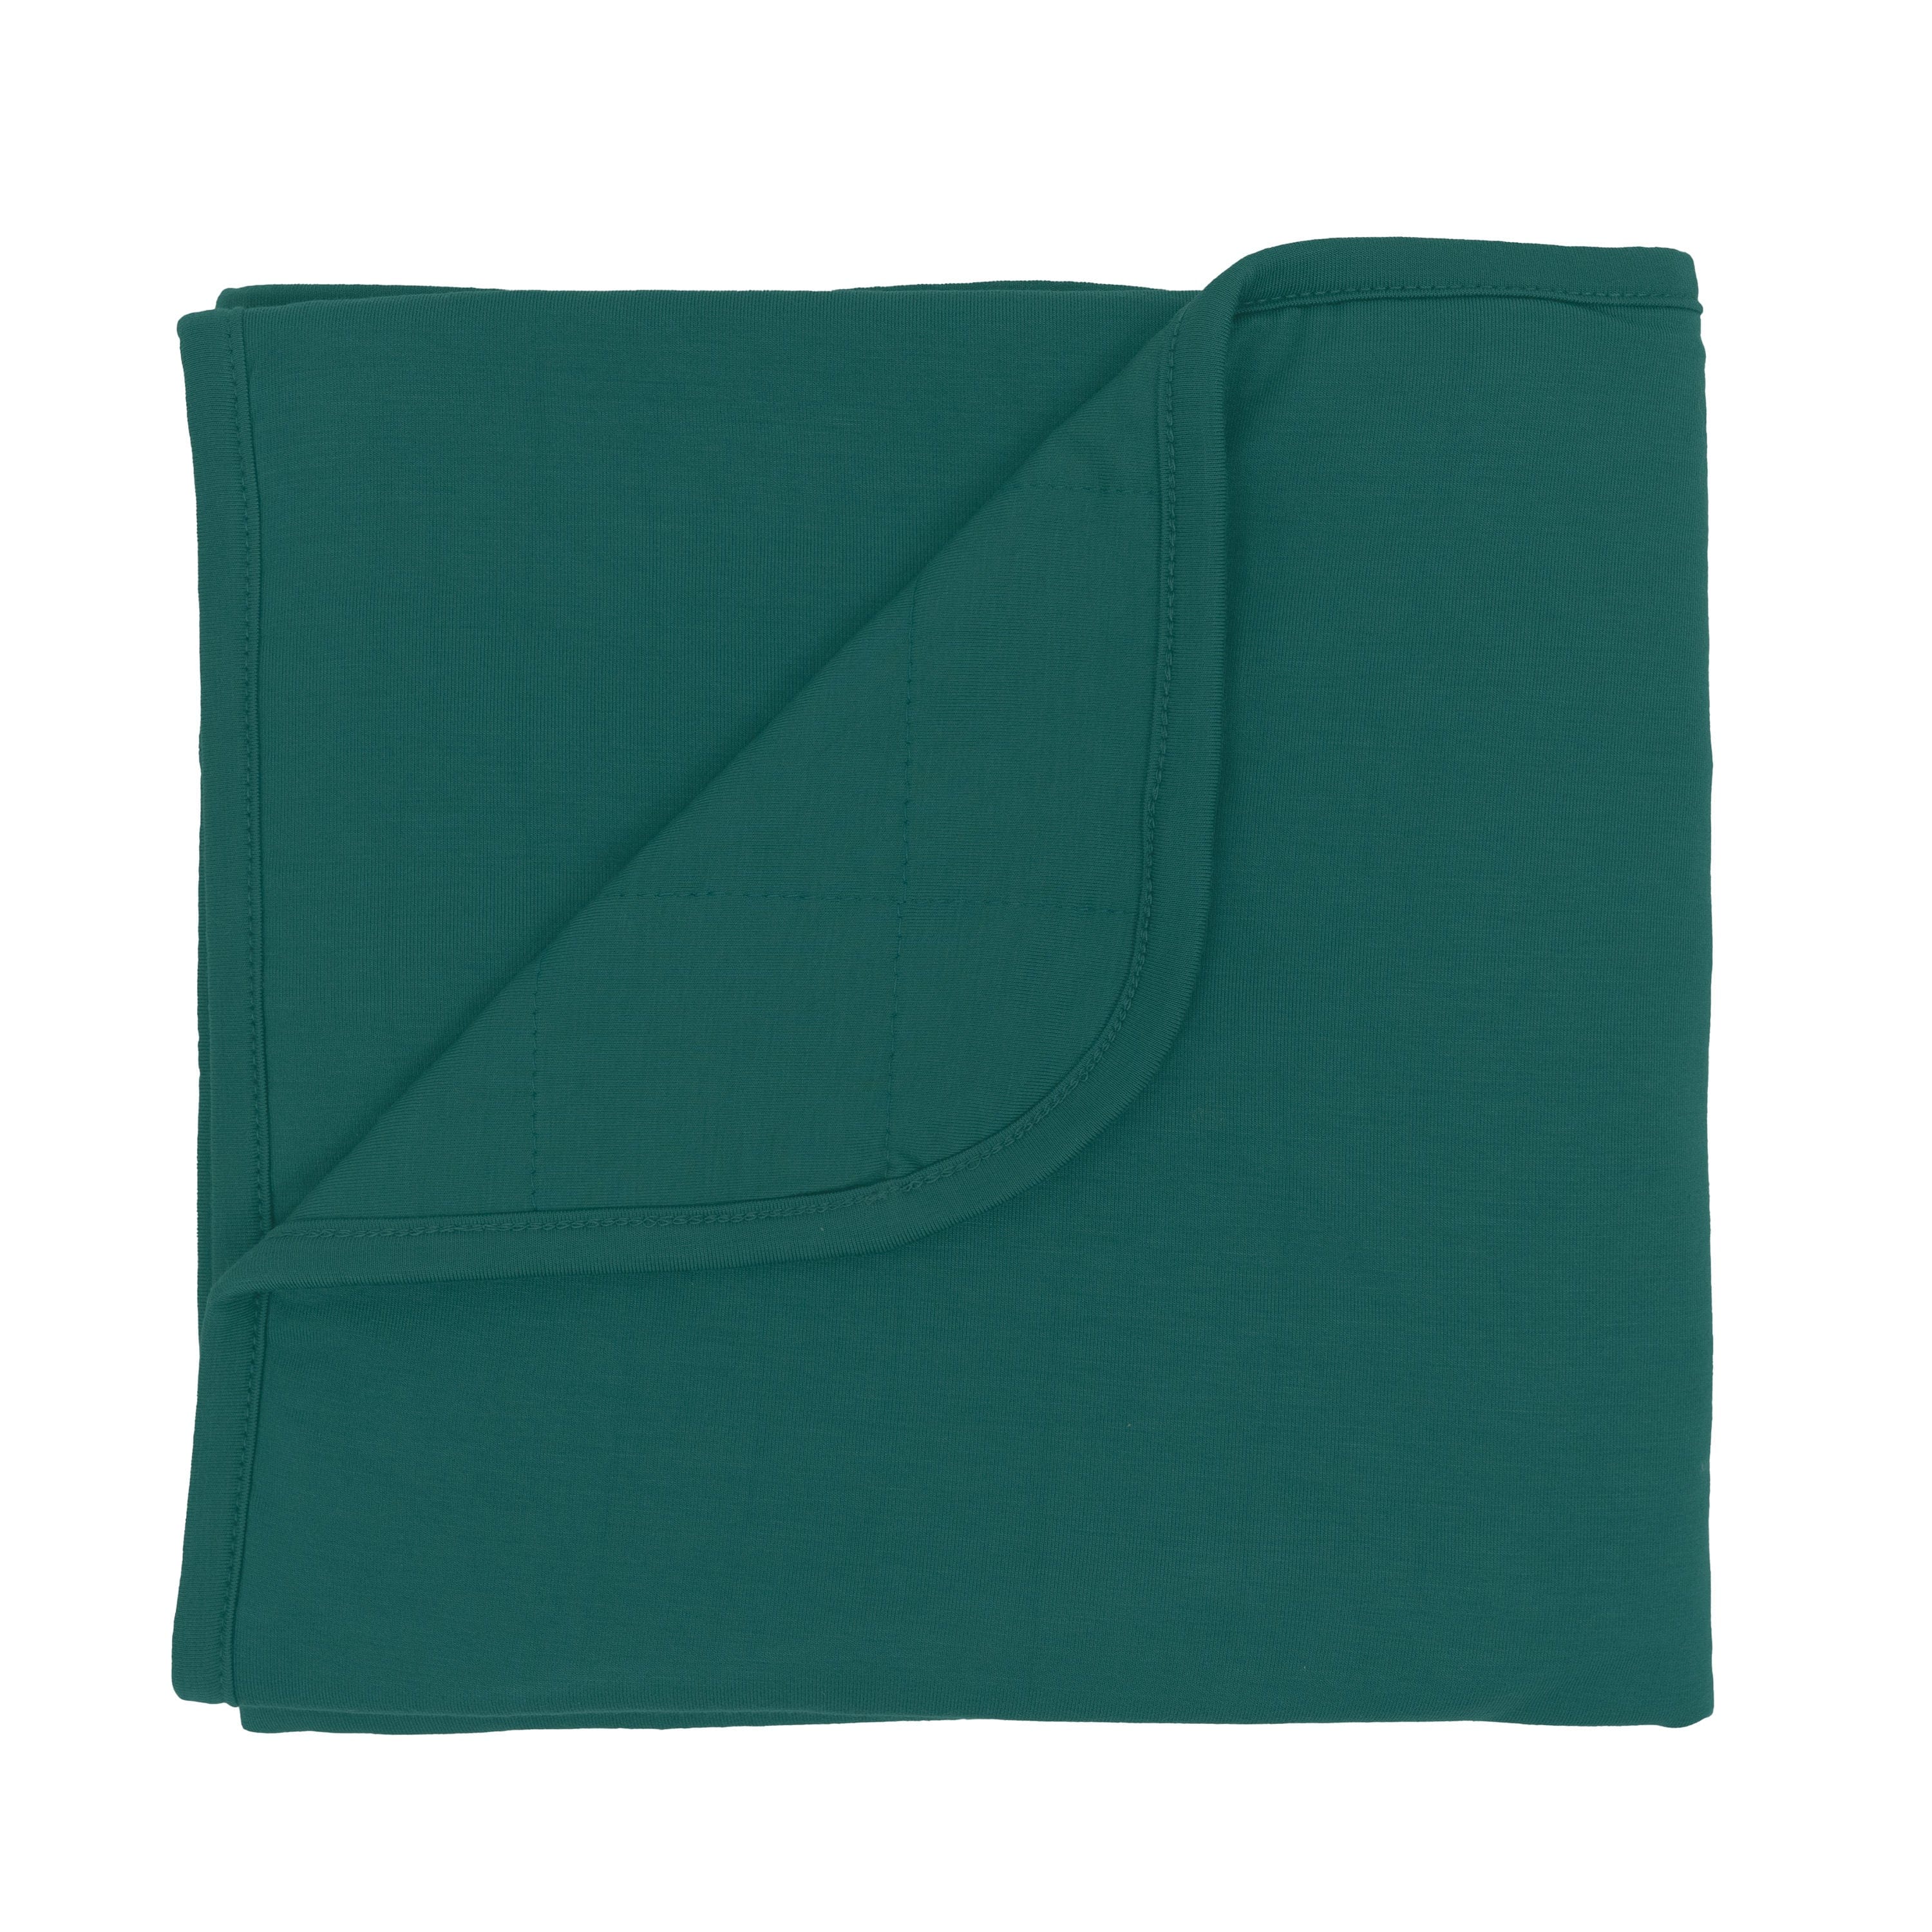 Kyte Baby Blanket in Emerald Green